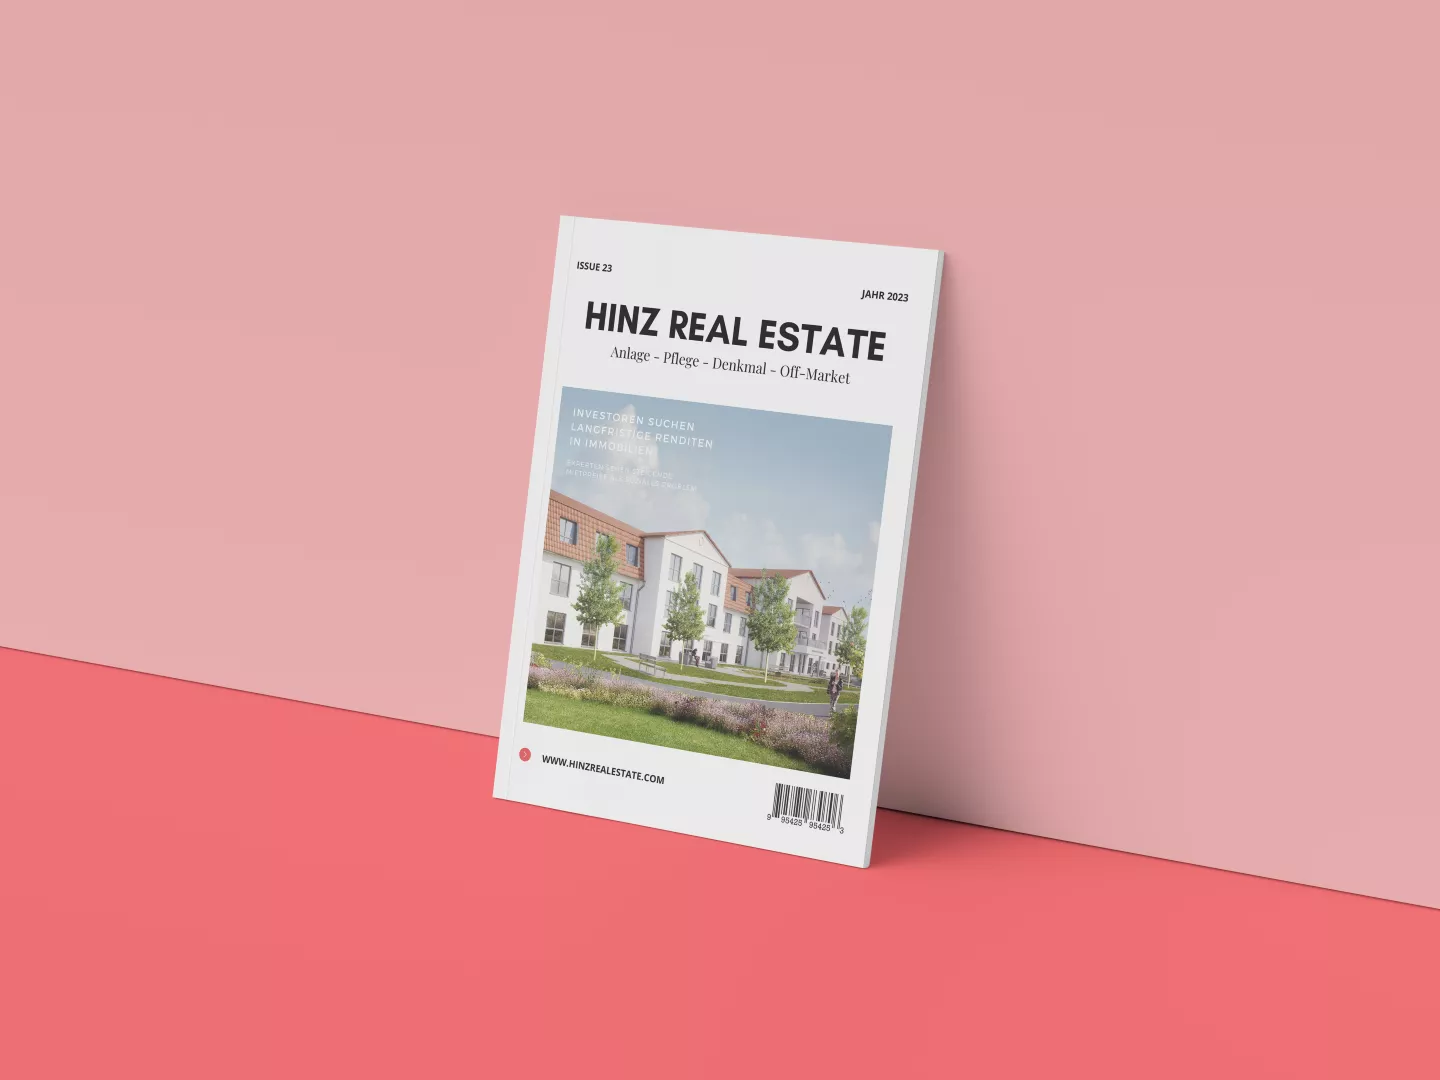 Hinz Real Estate Anlageimmobilien und Pflegeimmobilien - Großzügiges Objekt direkt in Petershagen